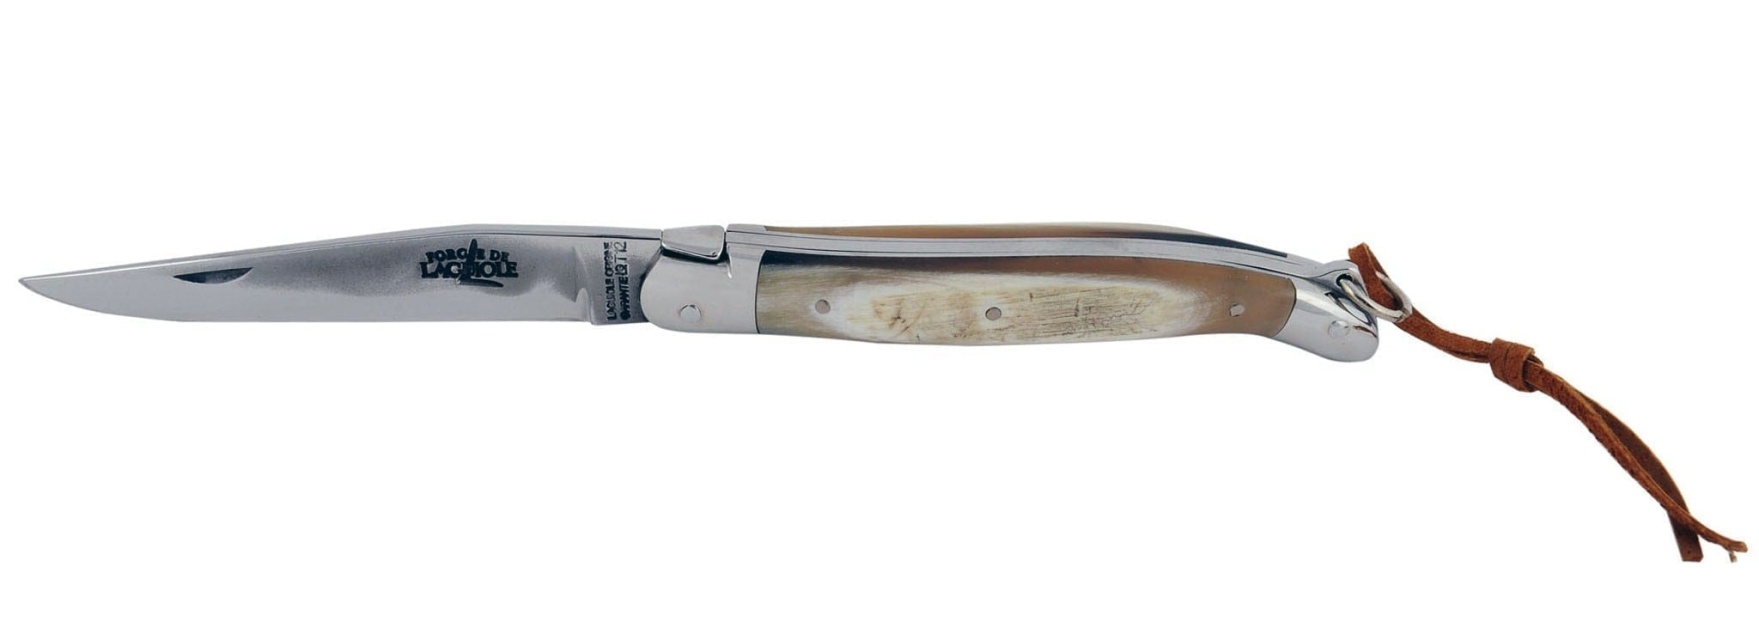 Kniv med foldeblad - håndtak i kuhorn